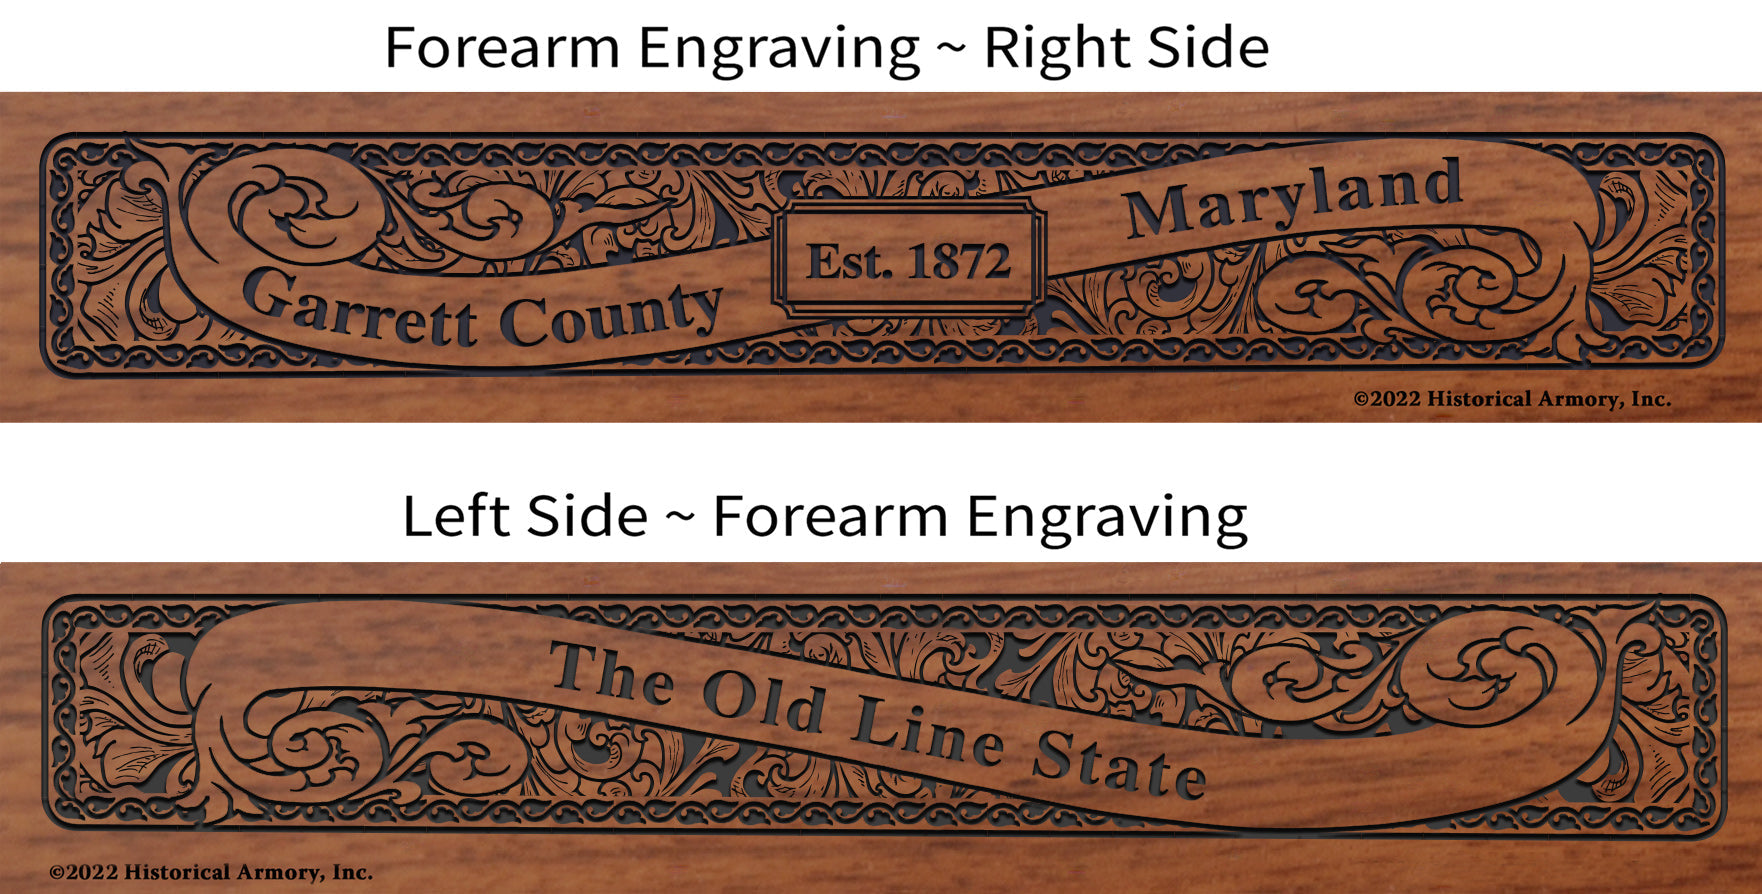 Garrett County Maryland Engraved Rifle Forearm